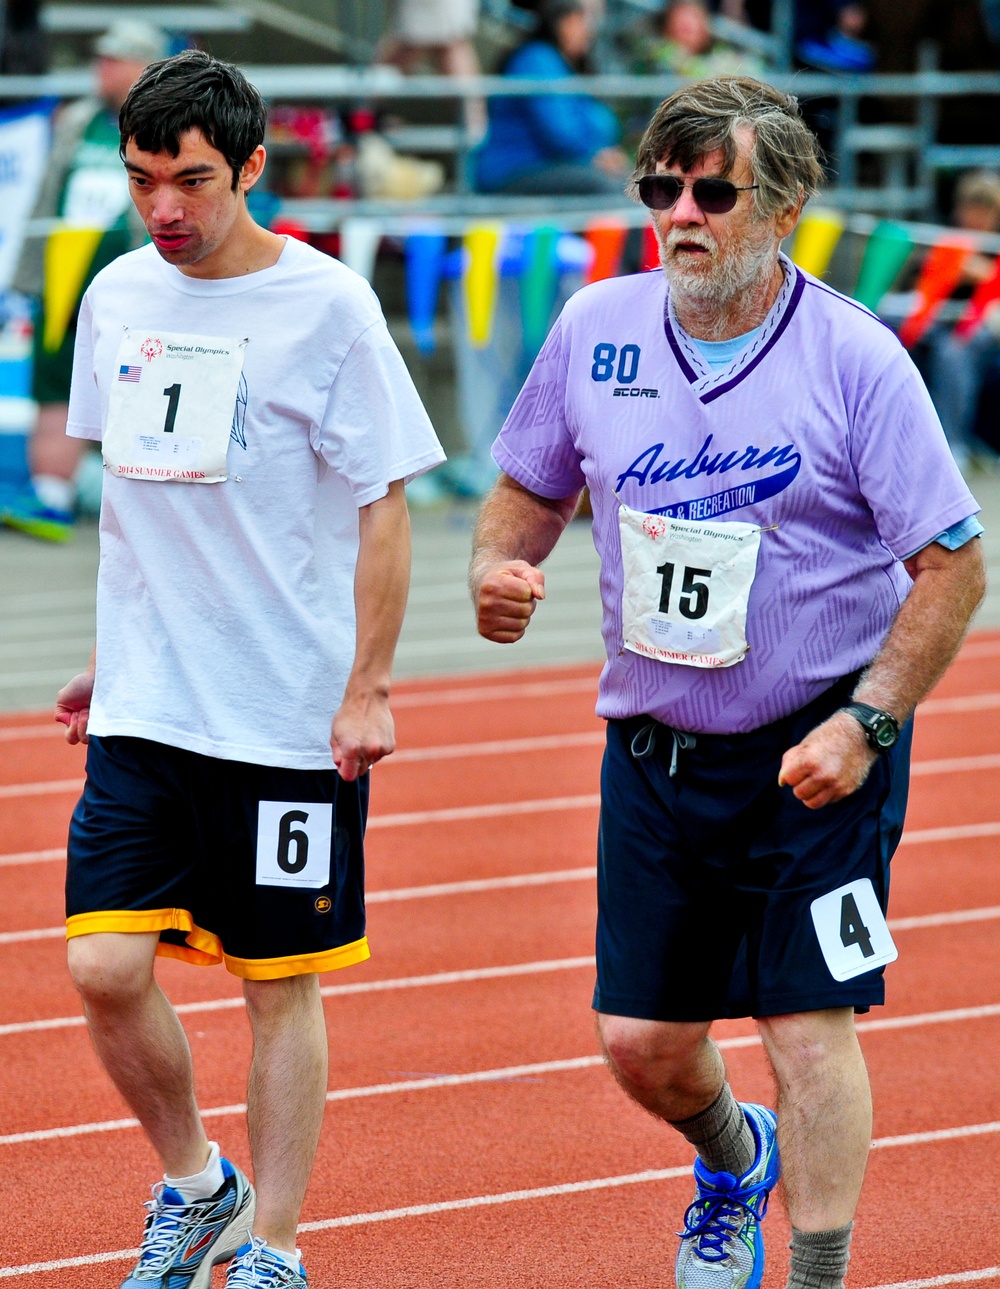 2014 Special Olympics Washington Summer Games